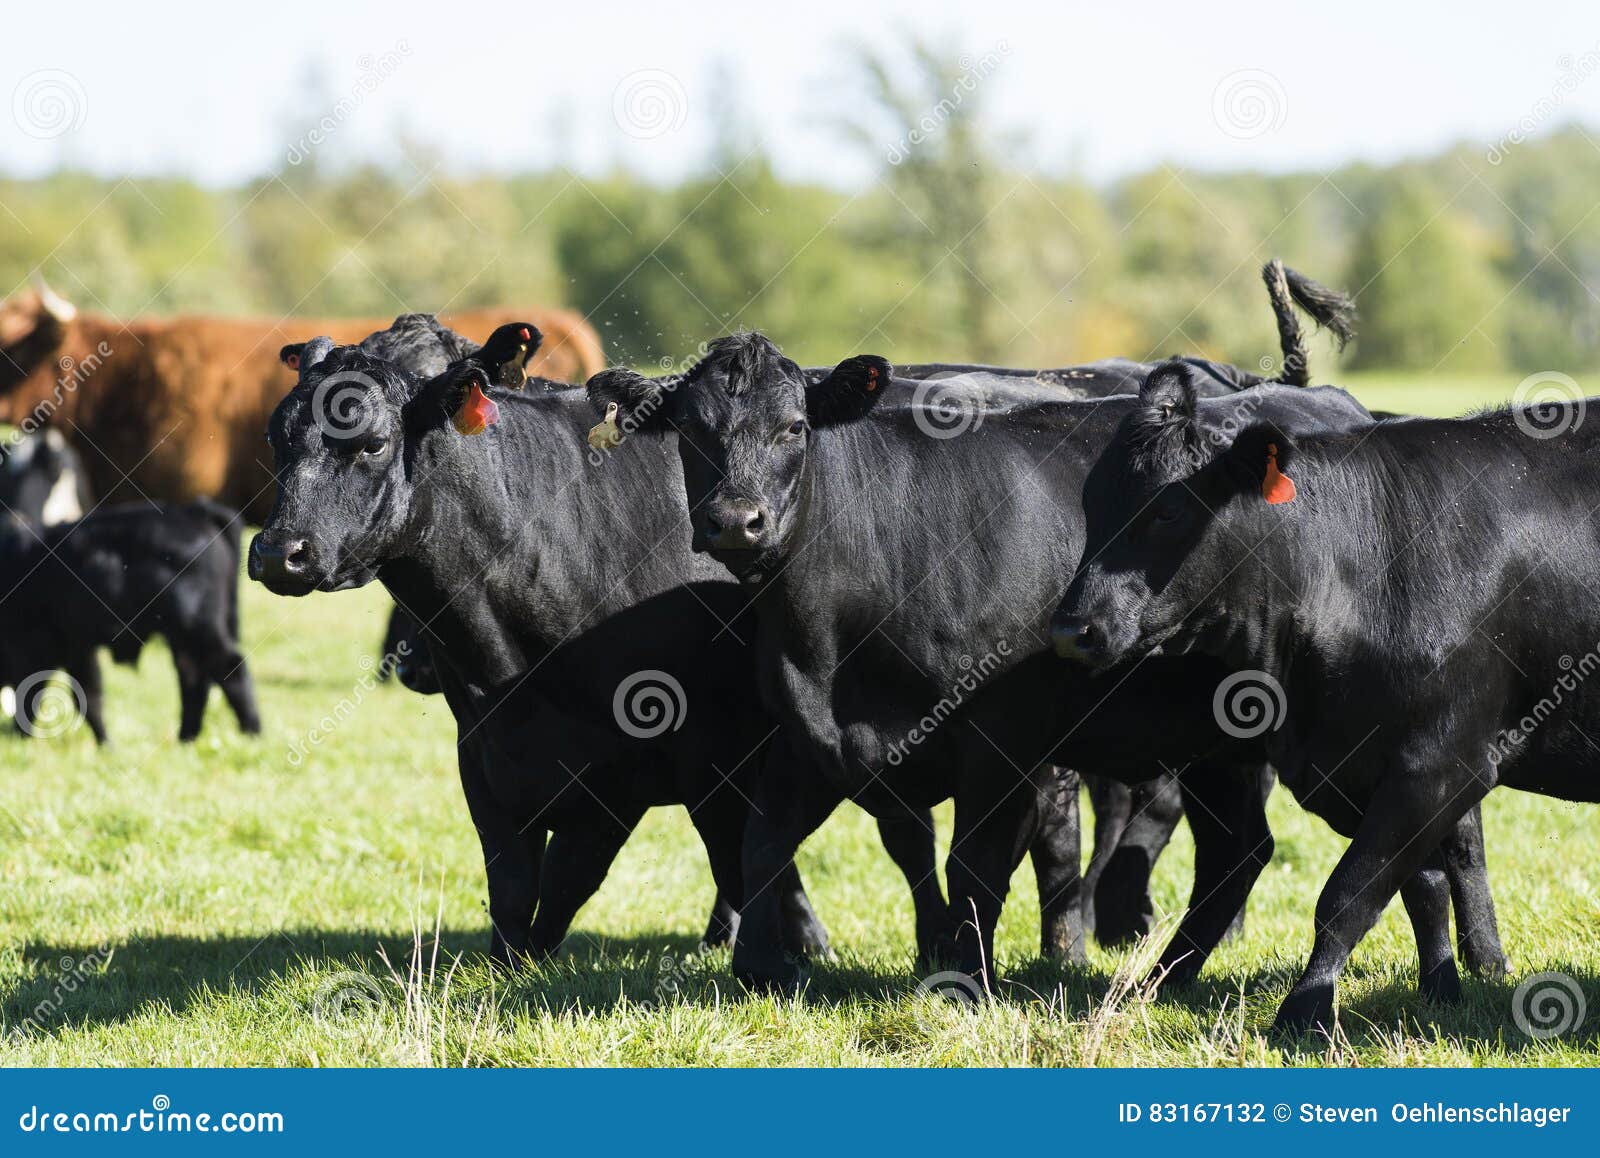 black angus cows